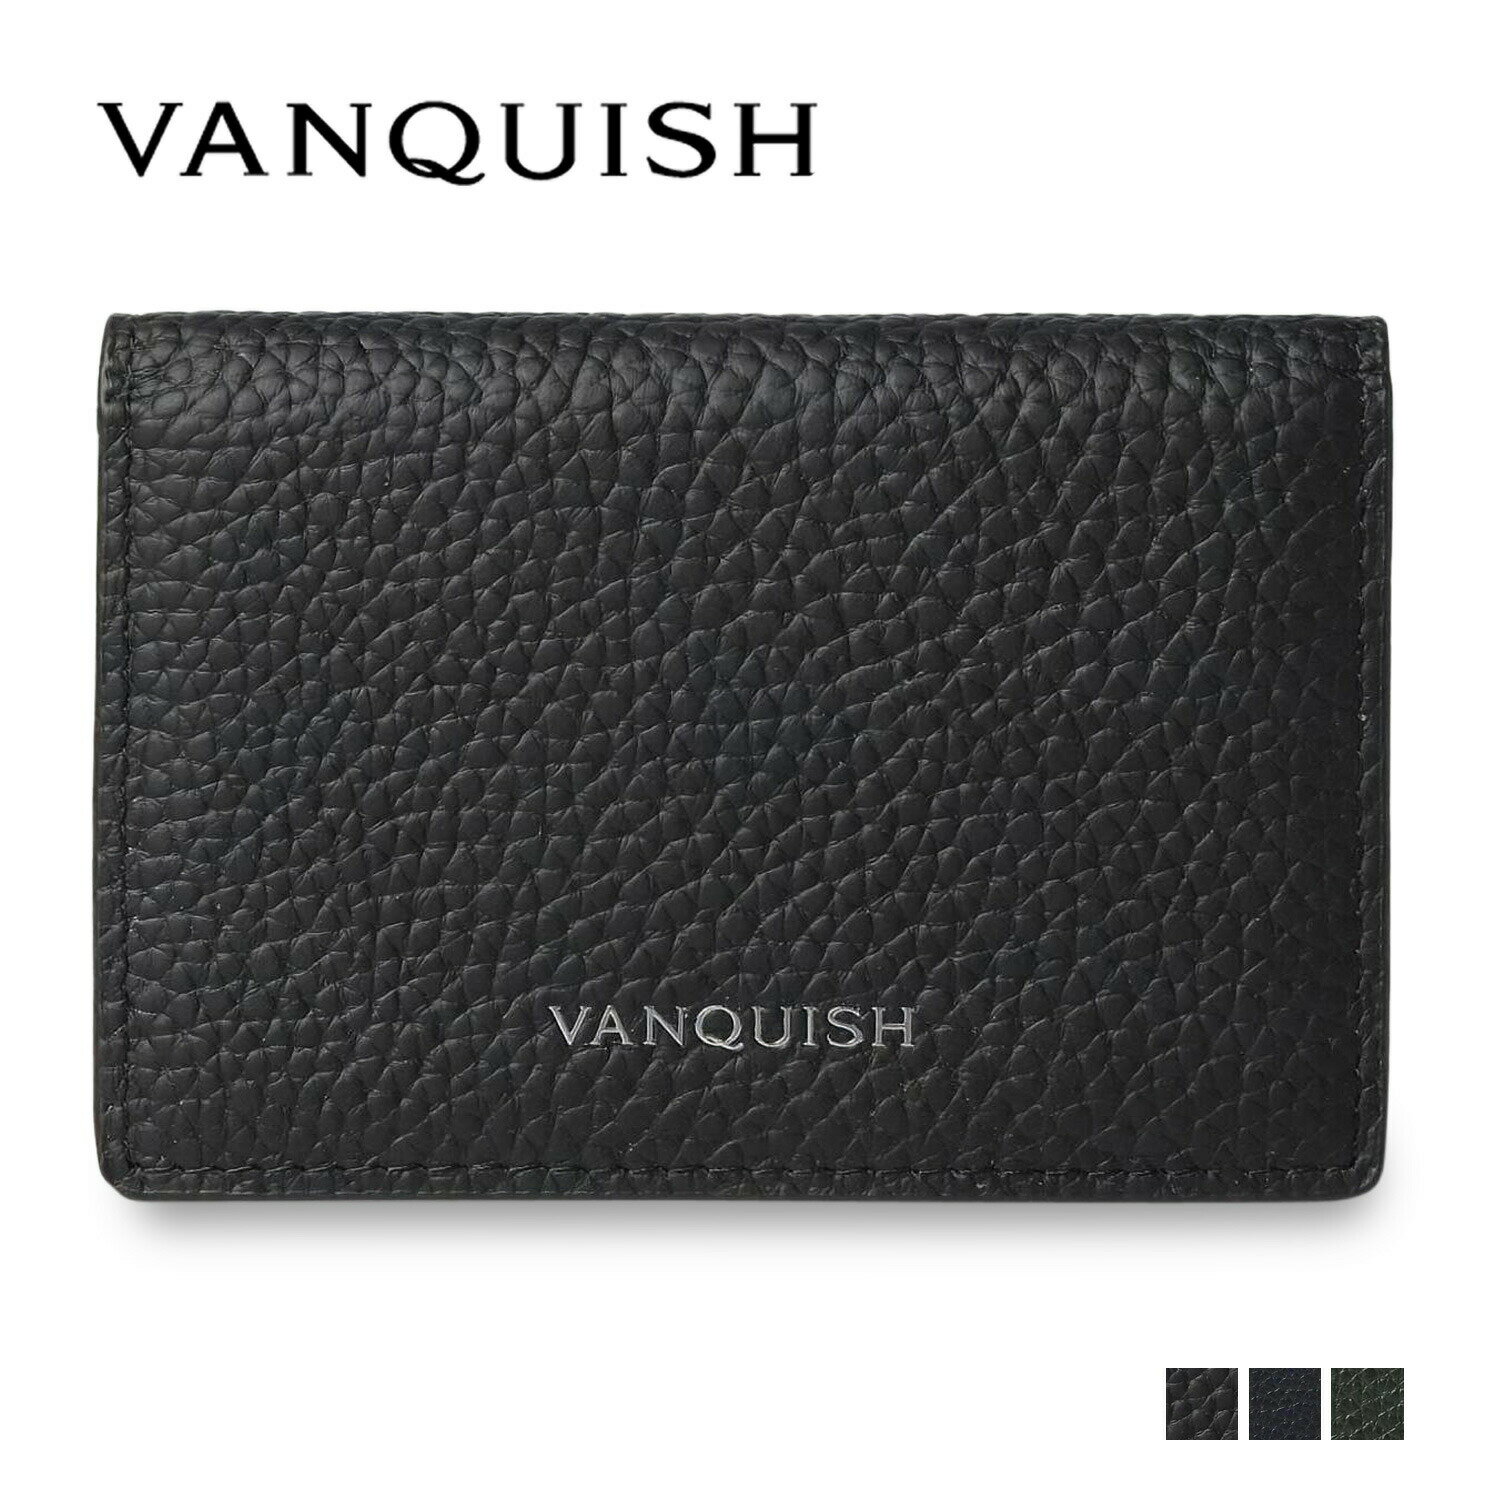 VANQUISH CARD CASE ヴァンキッシュ 名刺入れ 定期入れ カードケース メンズ 本革 ブラック ネイビー ダーク グリーン 黒 43550